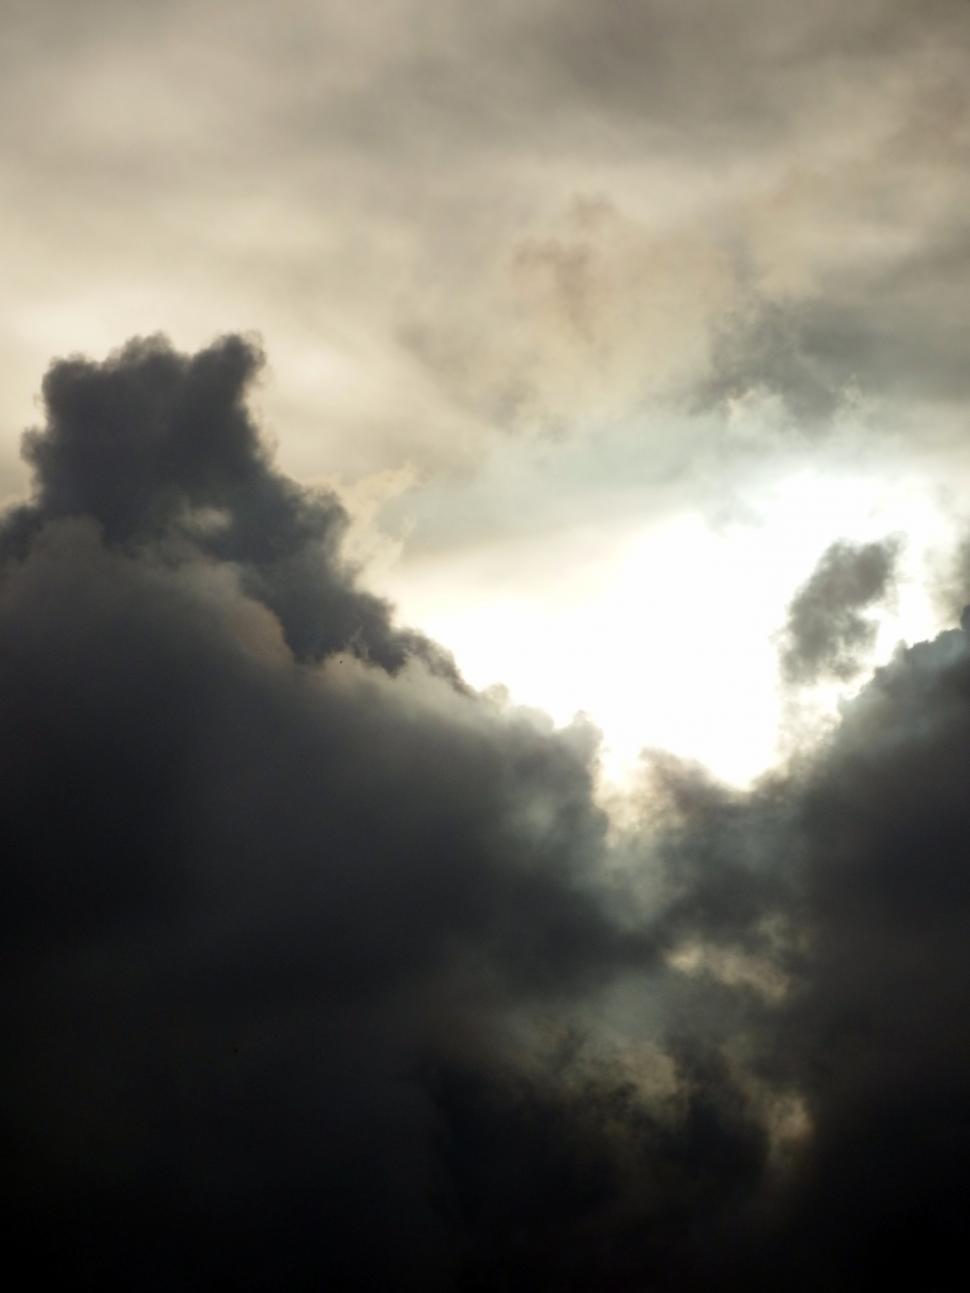 Free Image of Dark Clouds Stormy Sky 2 